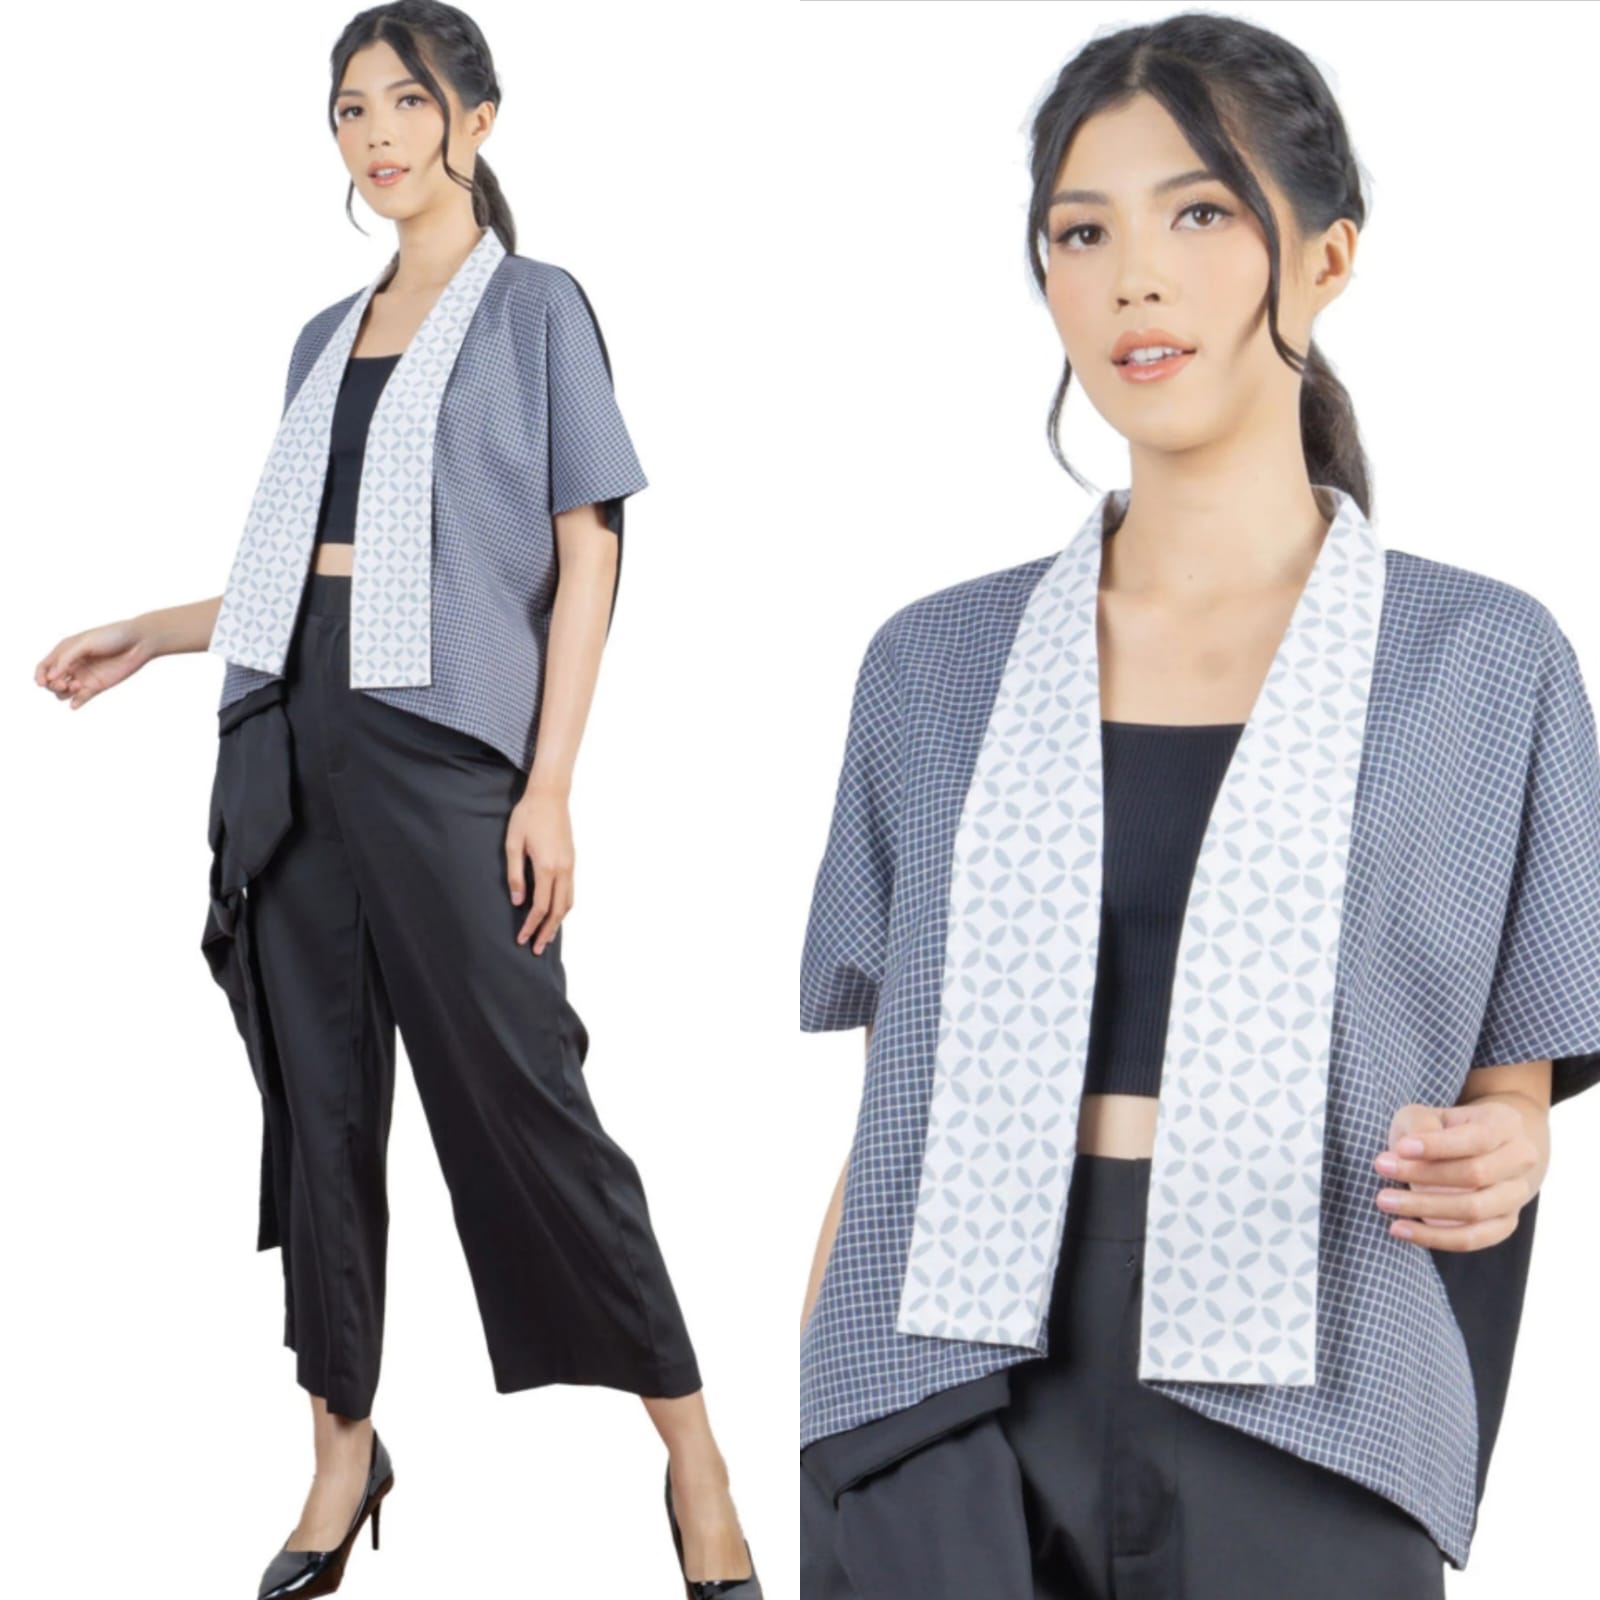 Tunjang Penampilanmu dengan Blazer Batik Kekinian: Ini 5 Inspirasi Model dan Tips Perawatan Kain Batik